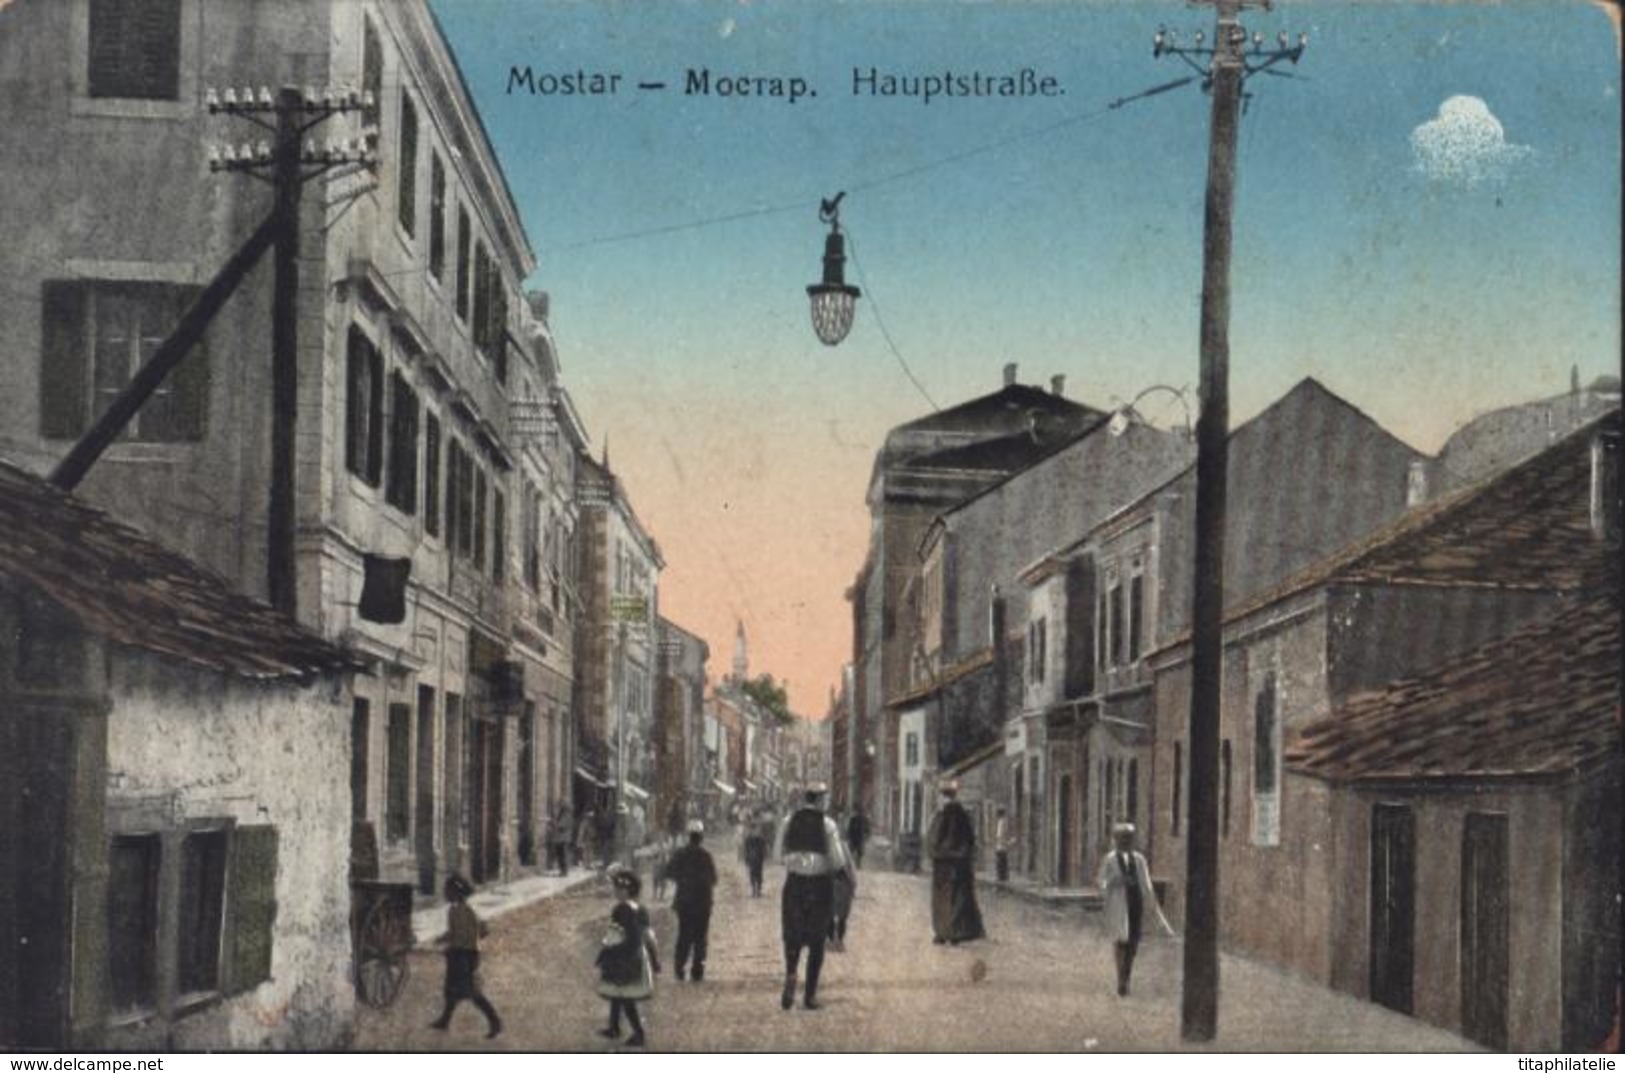 CPA Bosnie Herzégovine Mostar Moctap Hauptstrasse Feldpost K U K Milit Post Mostar 1 24 IV 17 Guerre 14 World War I - Bosnia And Herzegovina